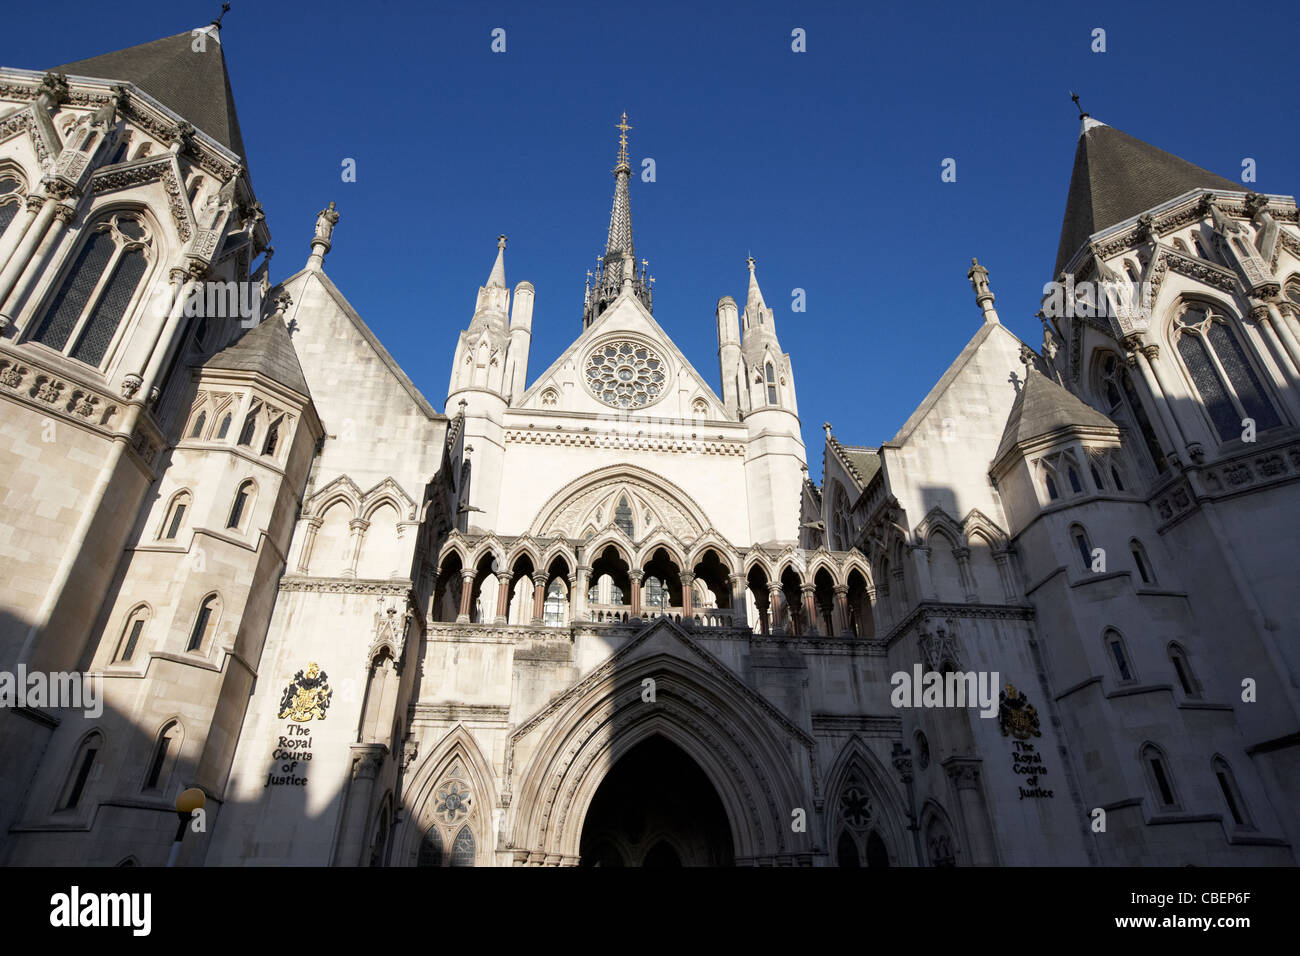 La Royal Courts of Justice London England uk united kingdom Banque D'Images